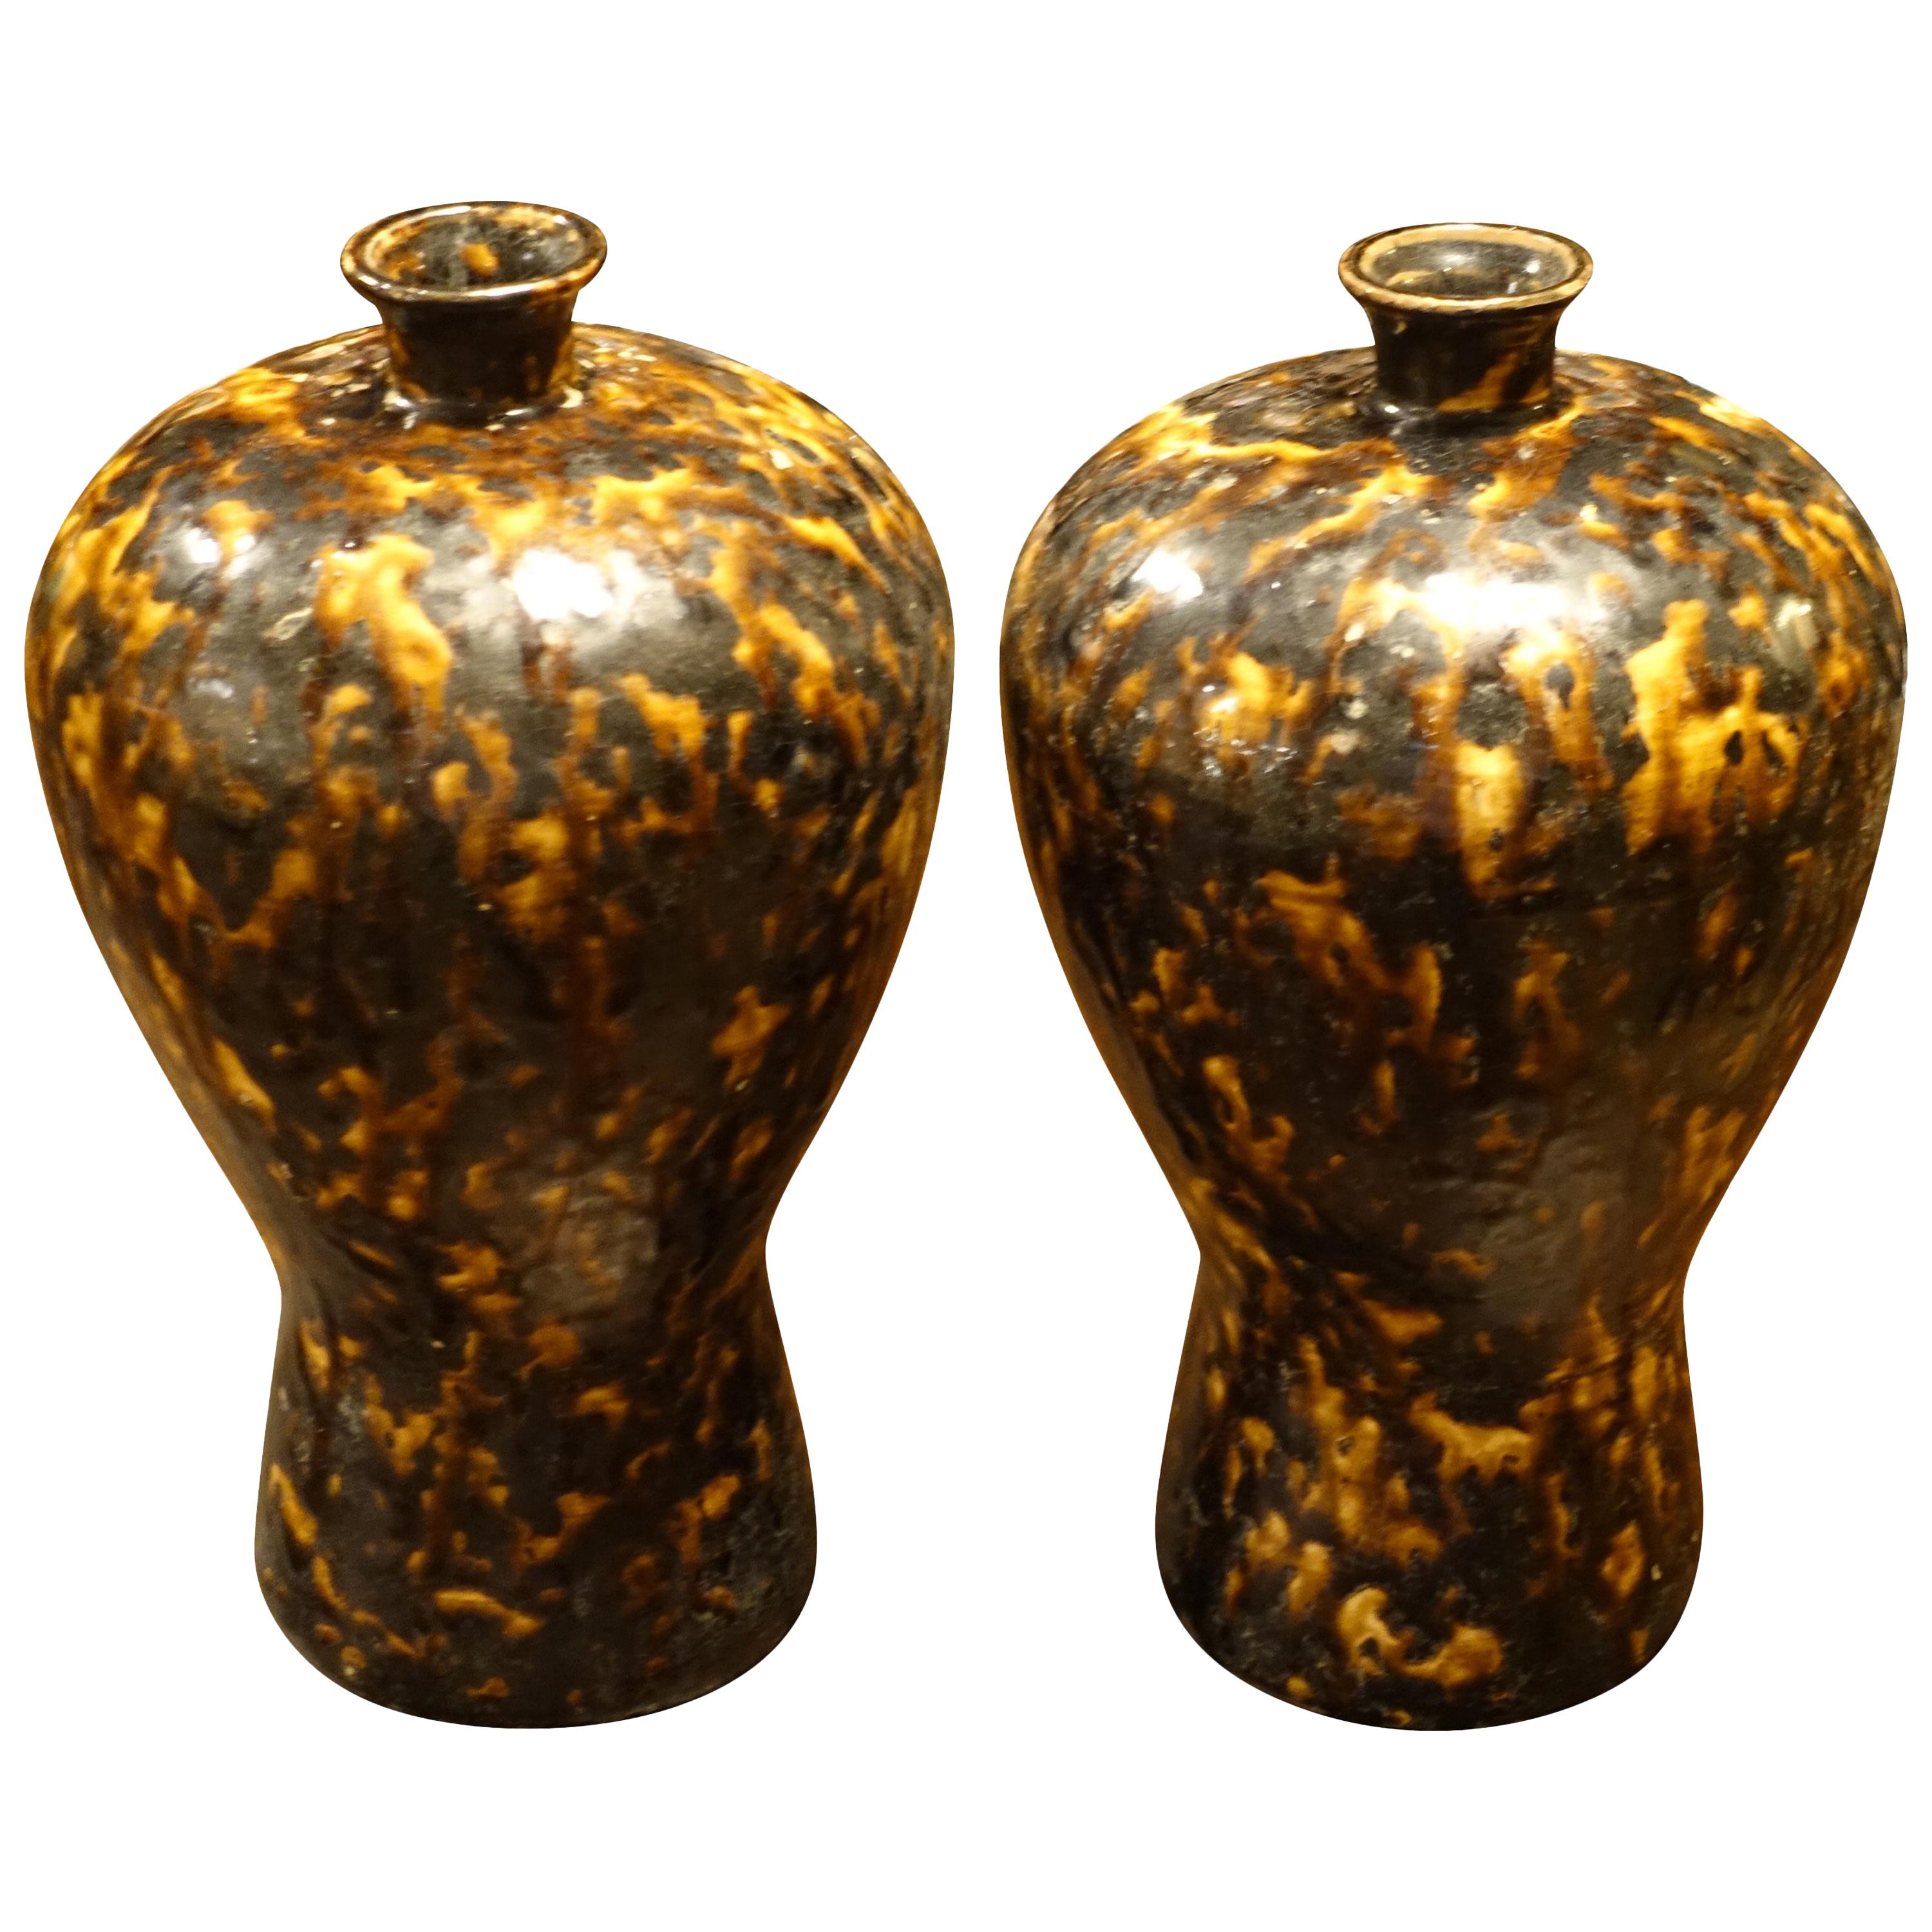 Pair of Tortoise Design Vases, China, Contemporary